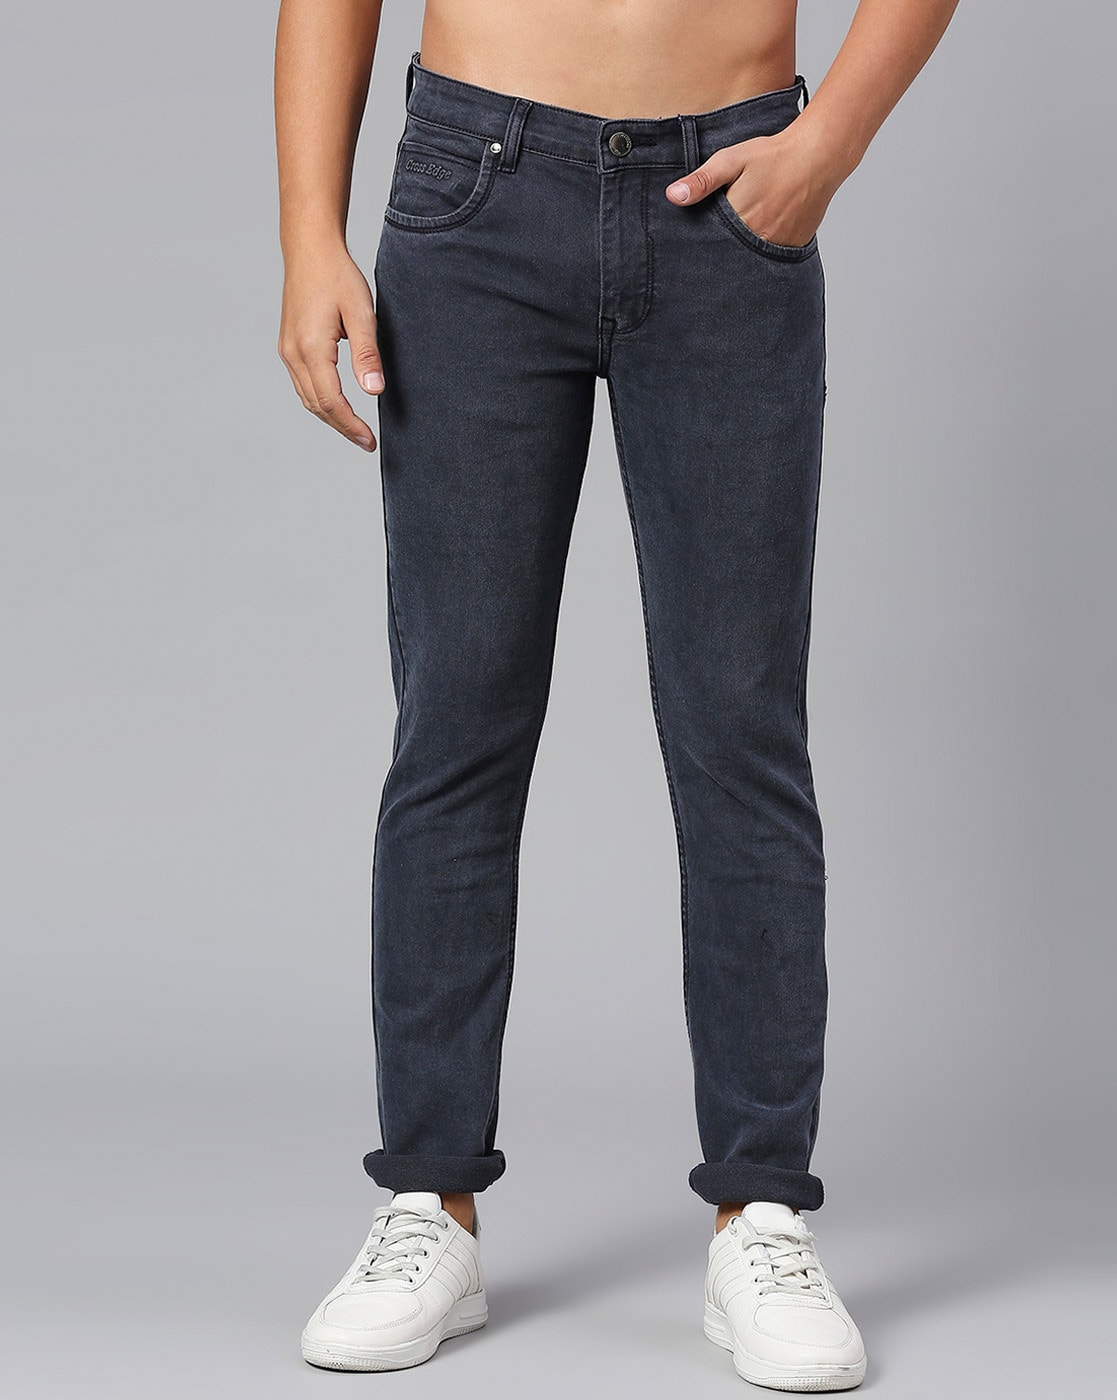 Men's Jeans - Buy Denim Jeans For Men Online | JadeBlue